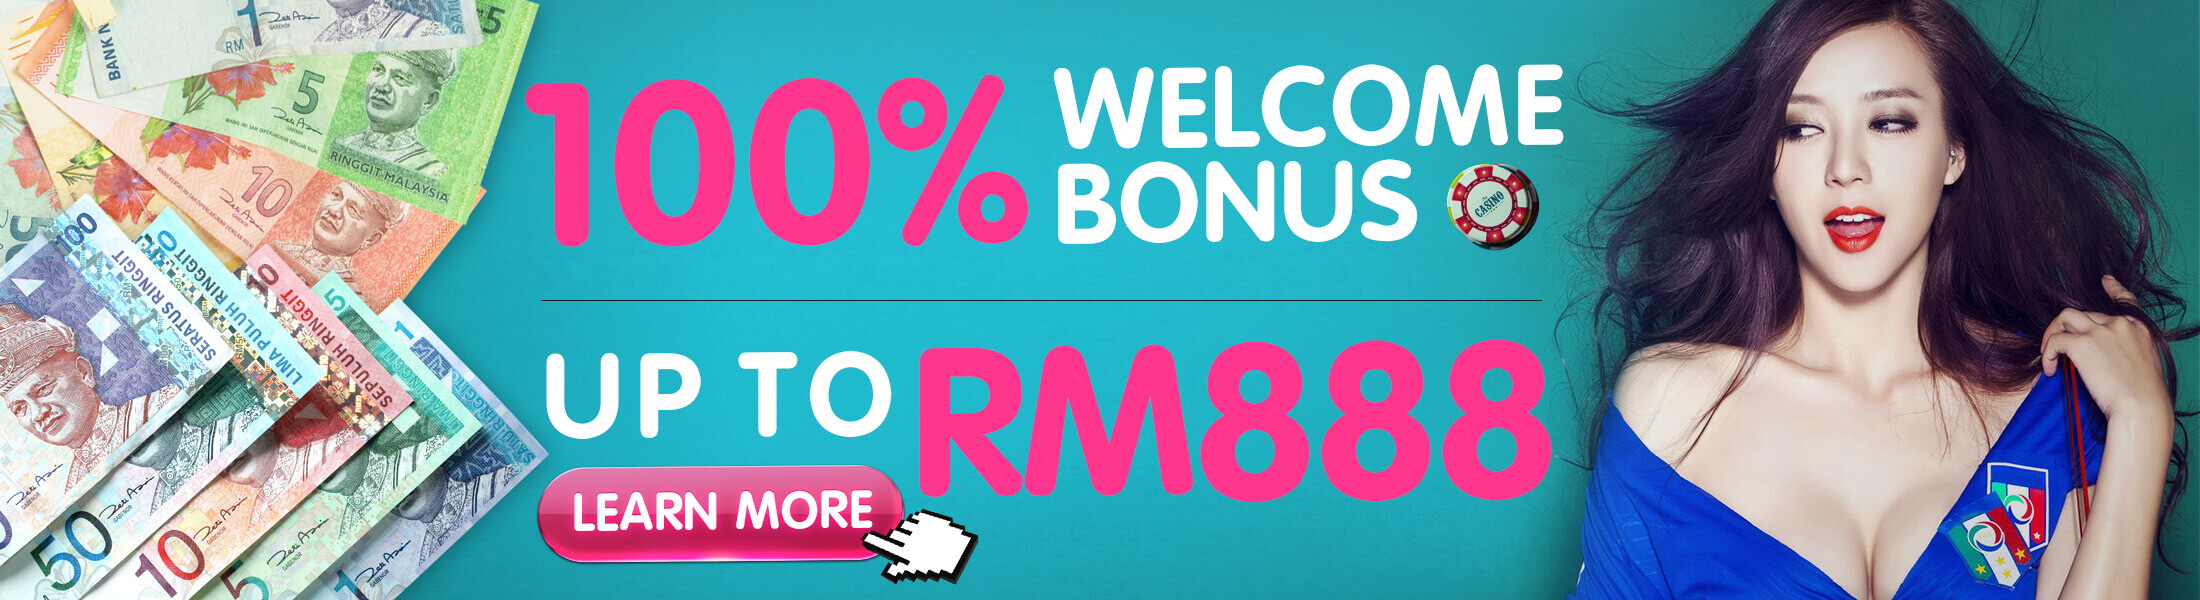 NTC33 Slot Welcome Bonus Up to RM888